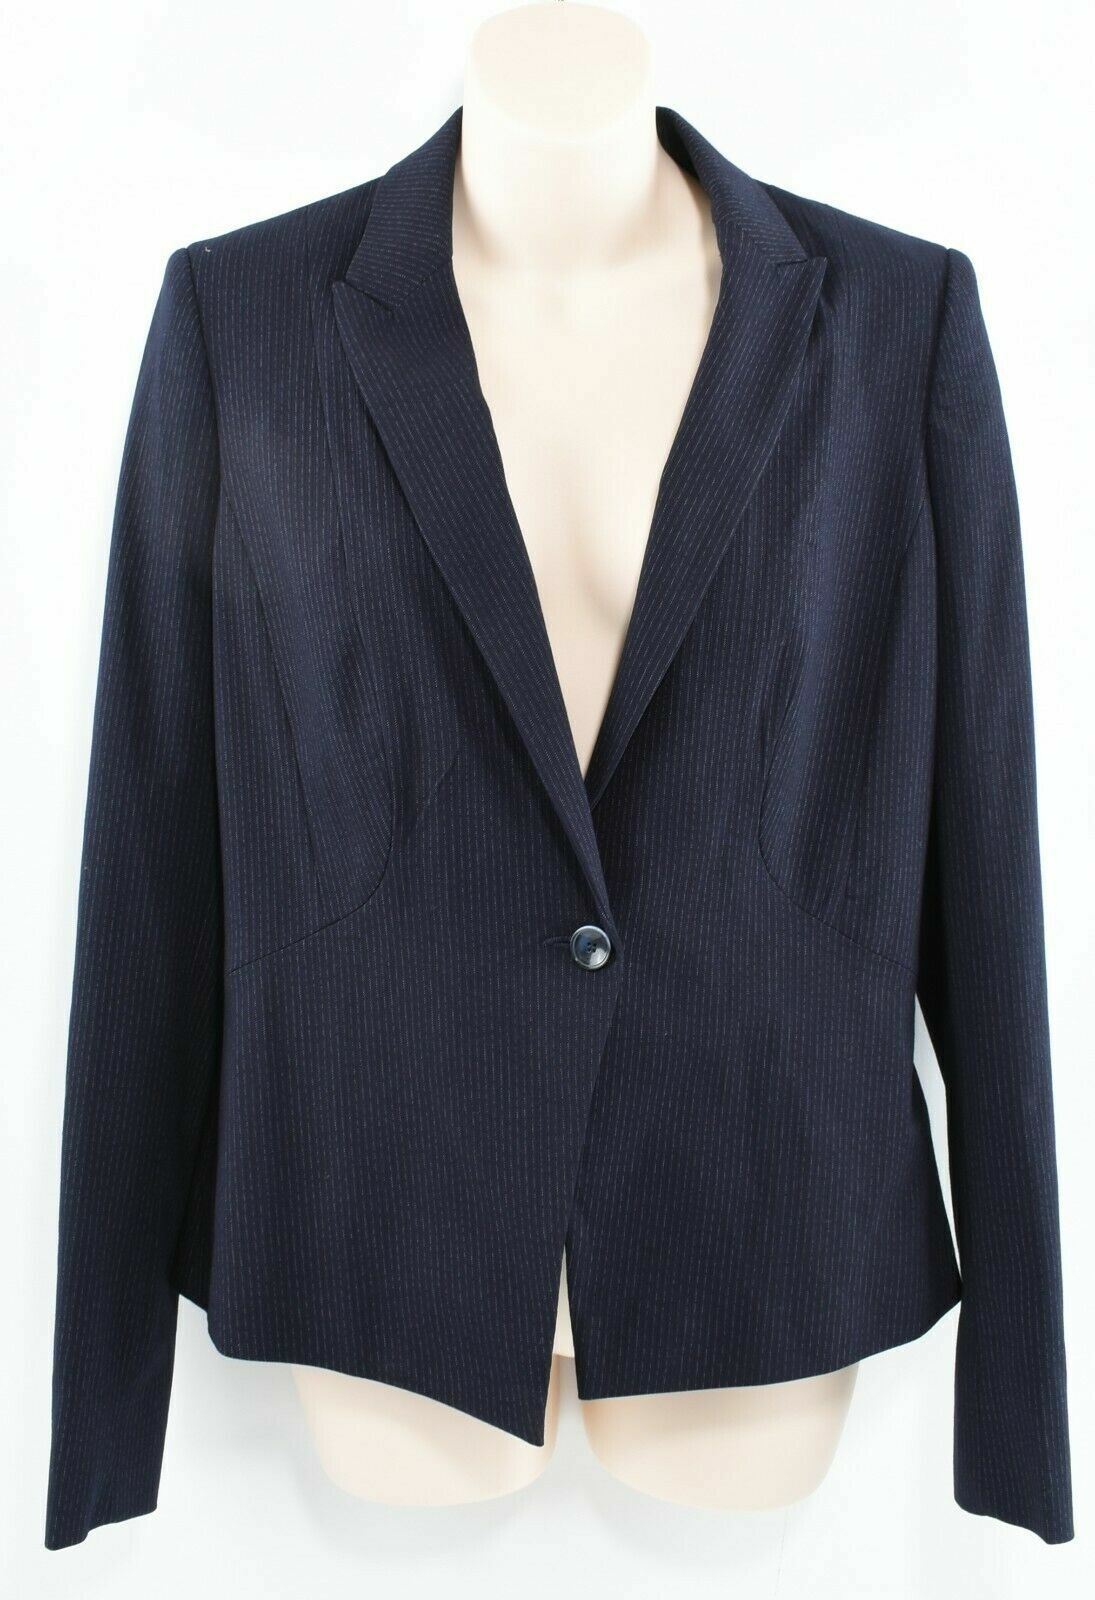 NEXT Women's Tailored Blazer Jacket, Pinstriped Navy Blue, size UK 10 R